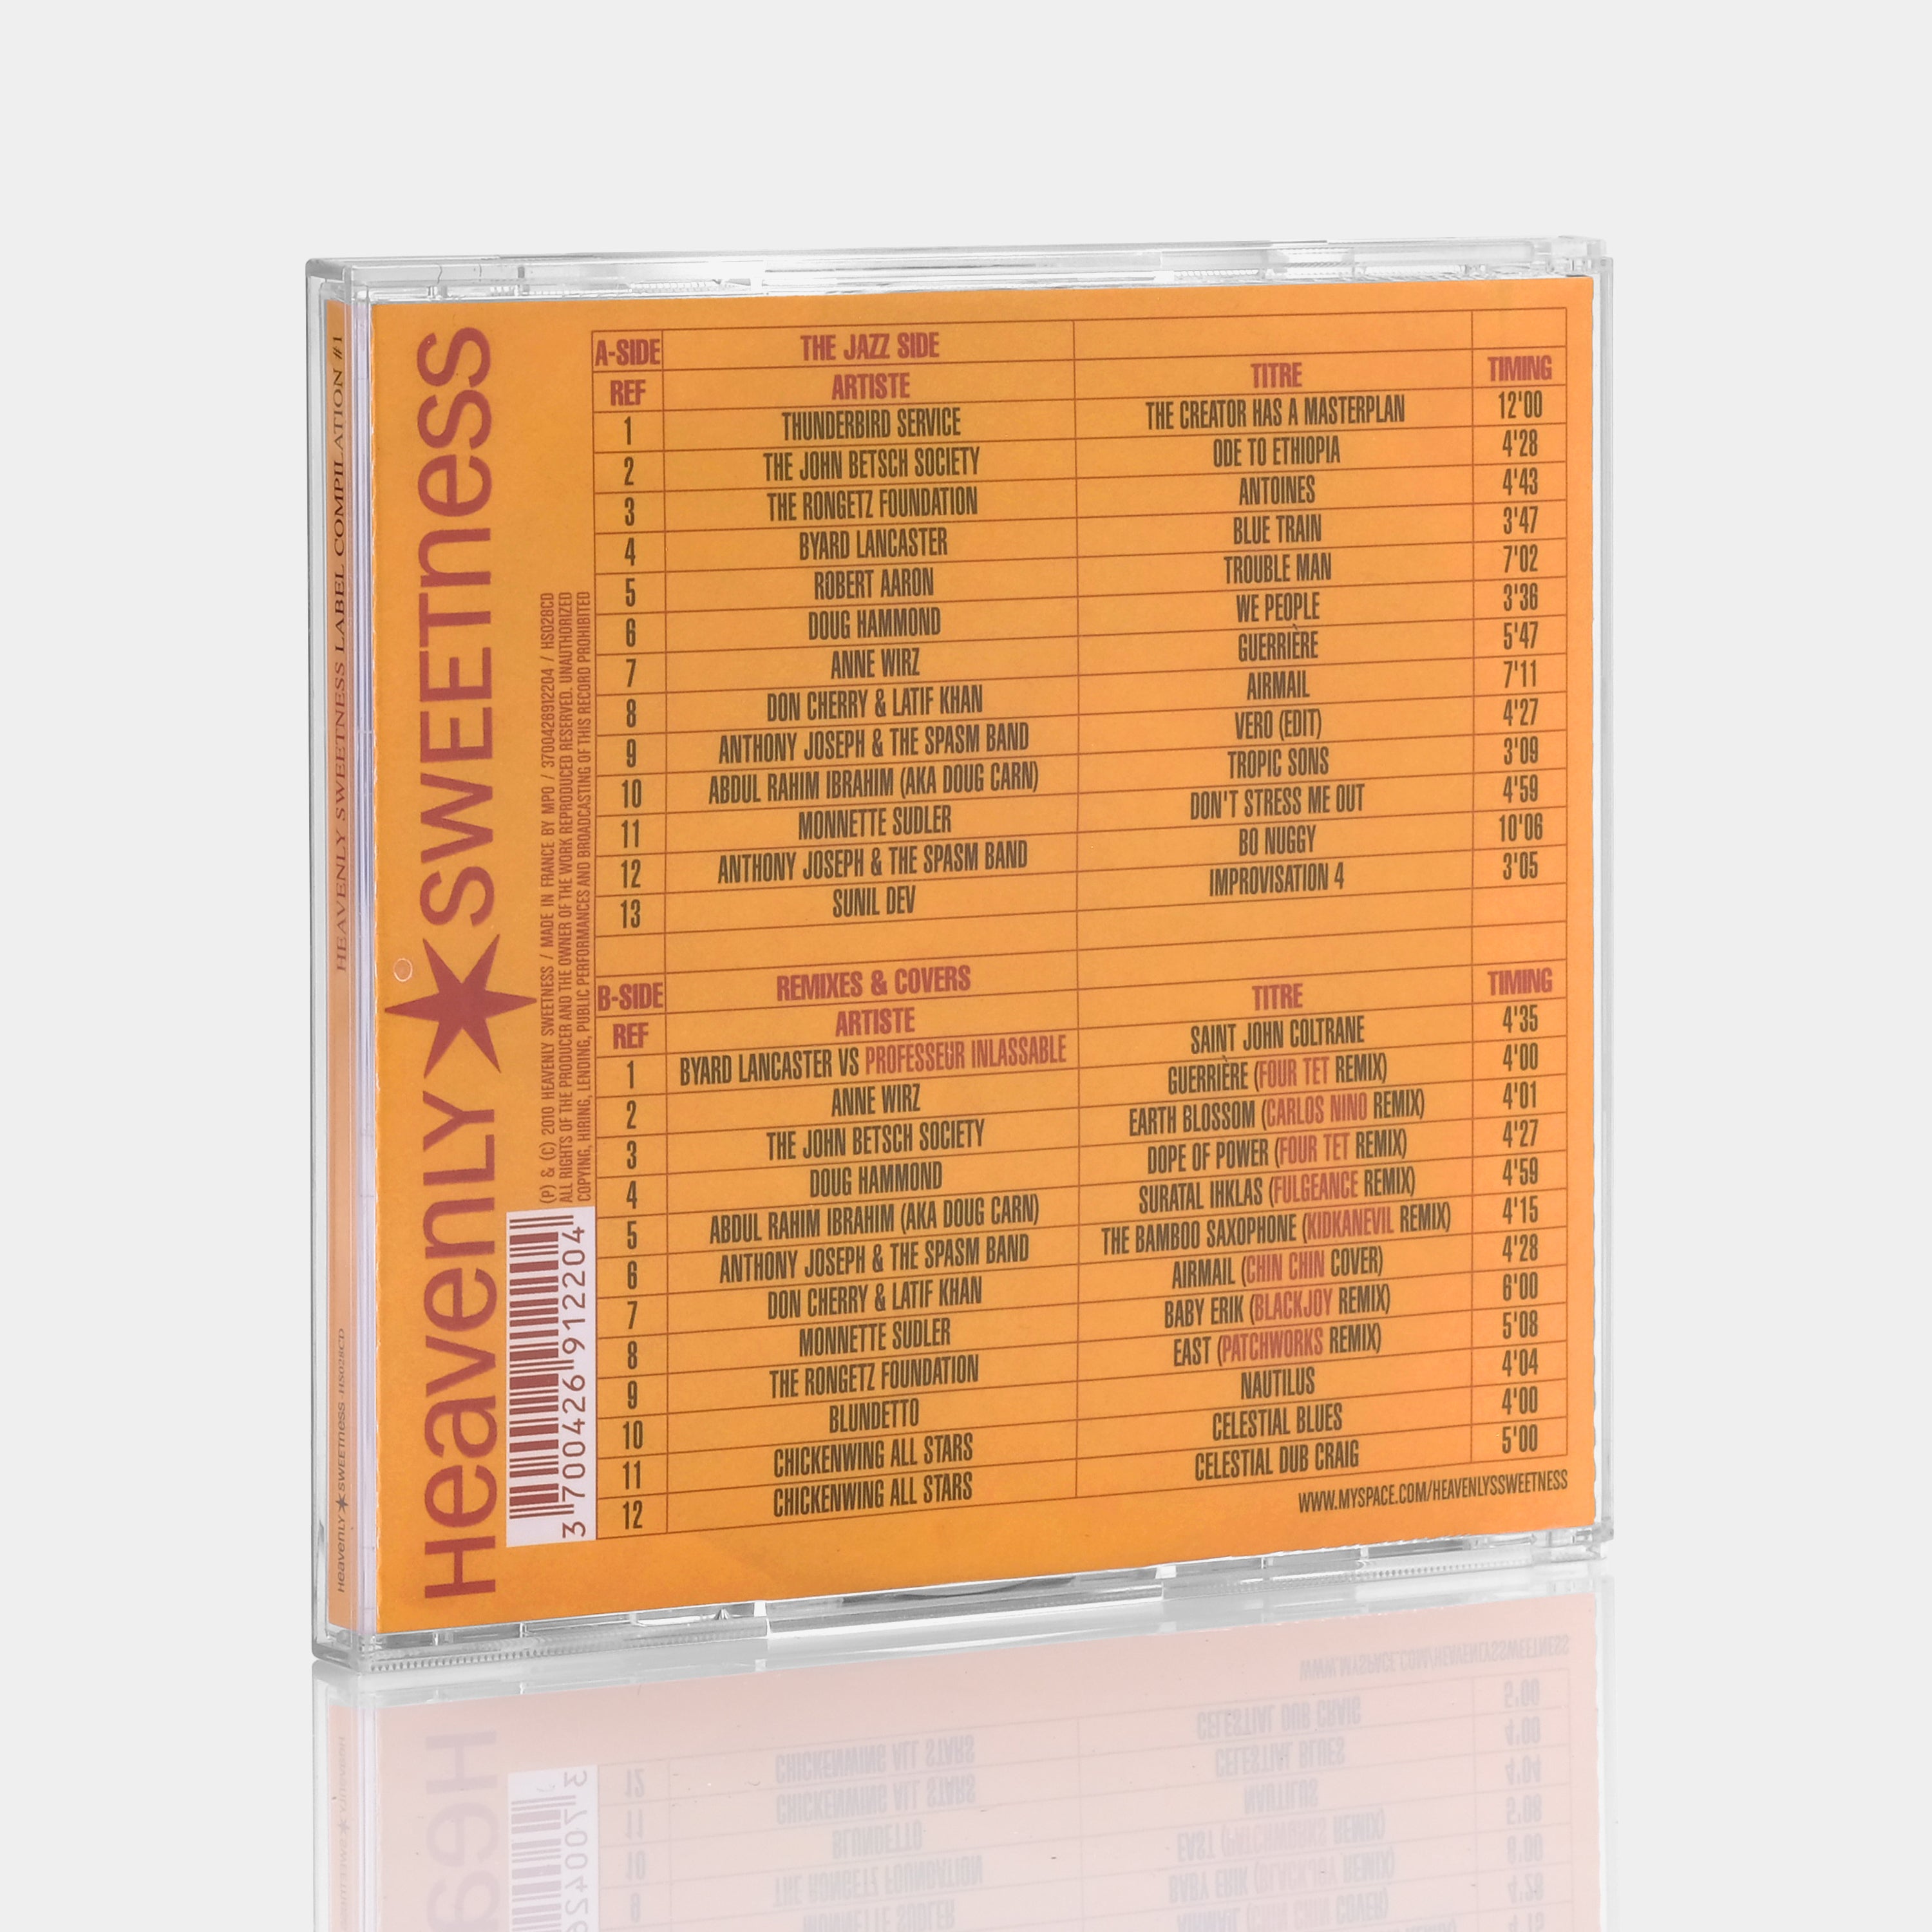 Heavenly Sweetness Label Compilation #1 2xCD